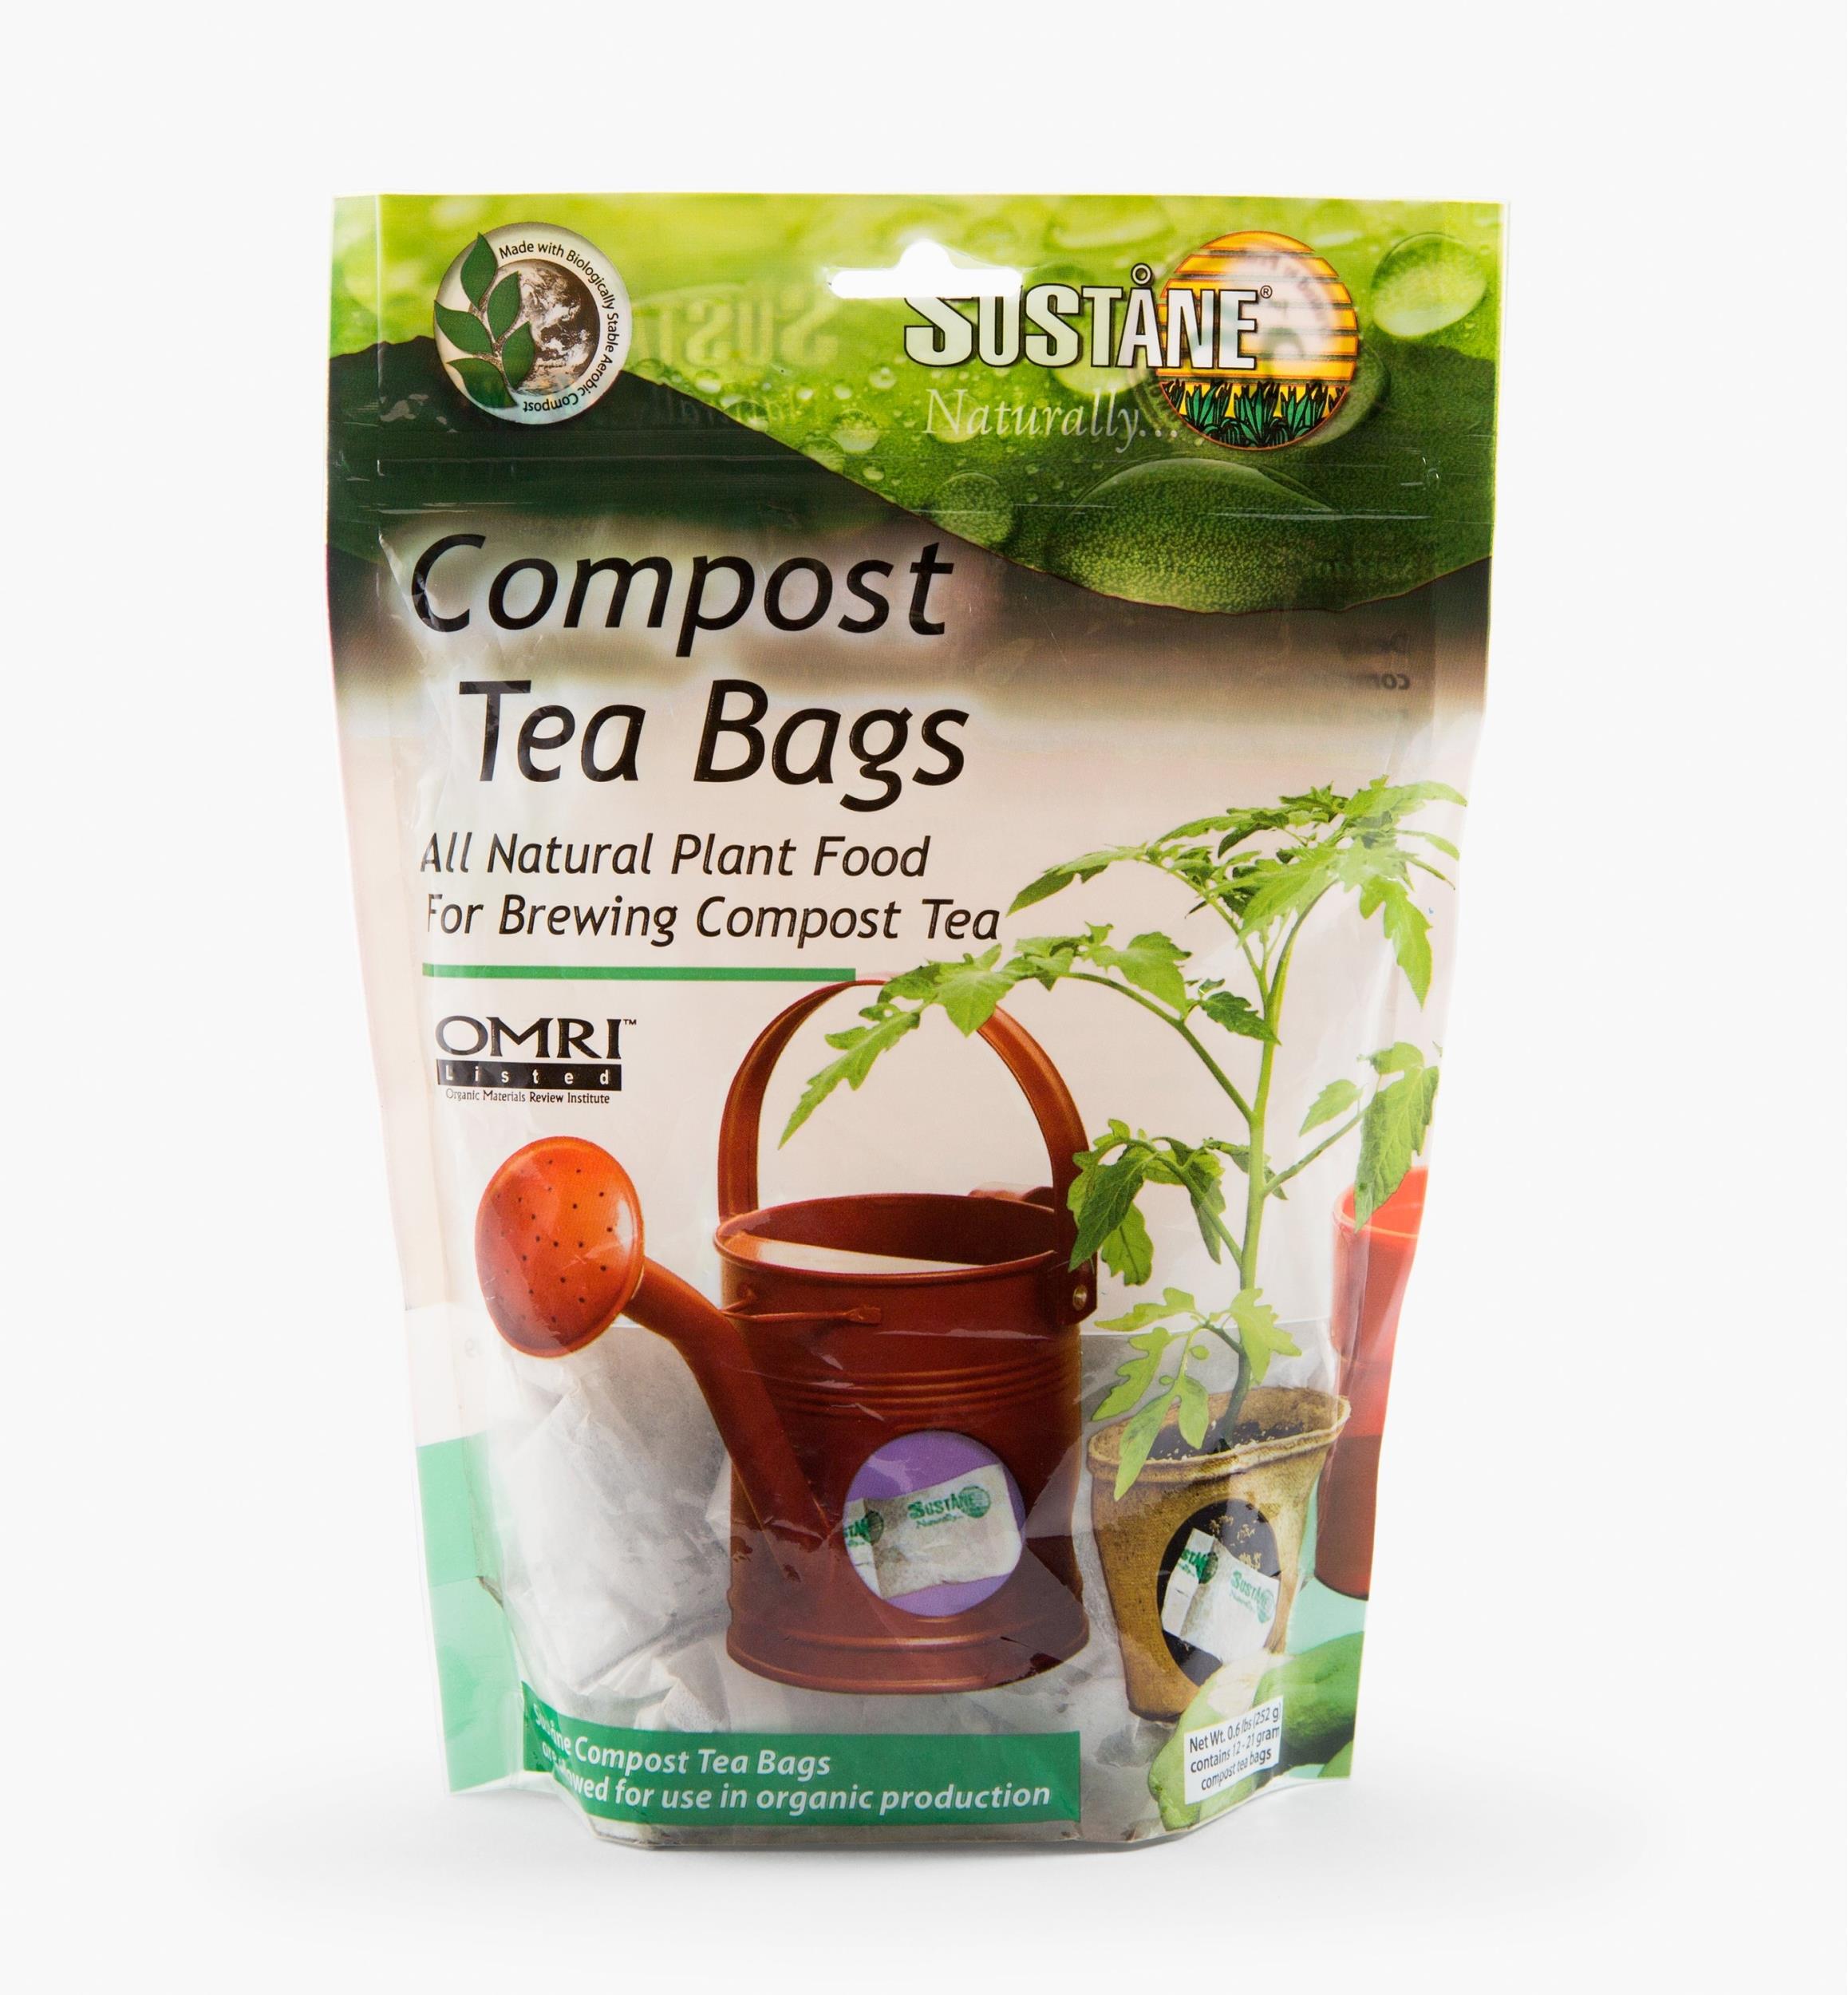 Should You Compost Tea Bags? - Green and Grumpy